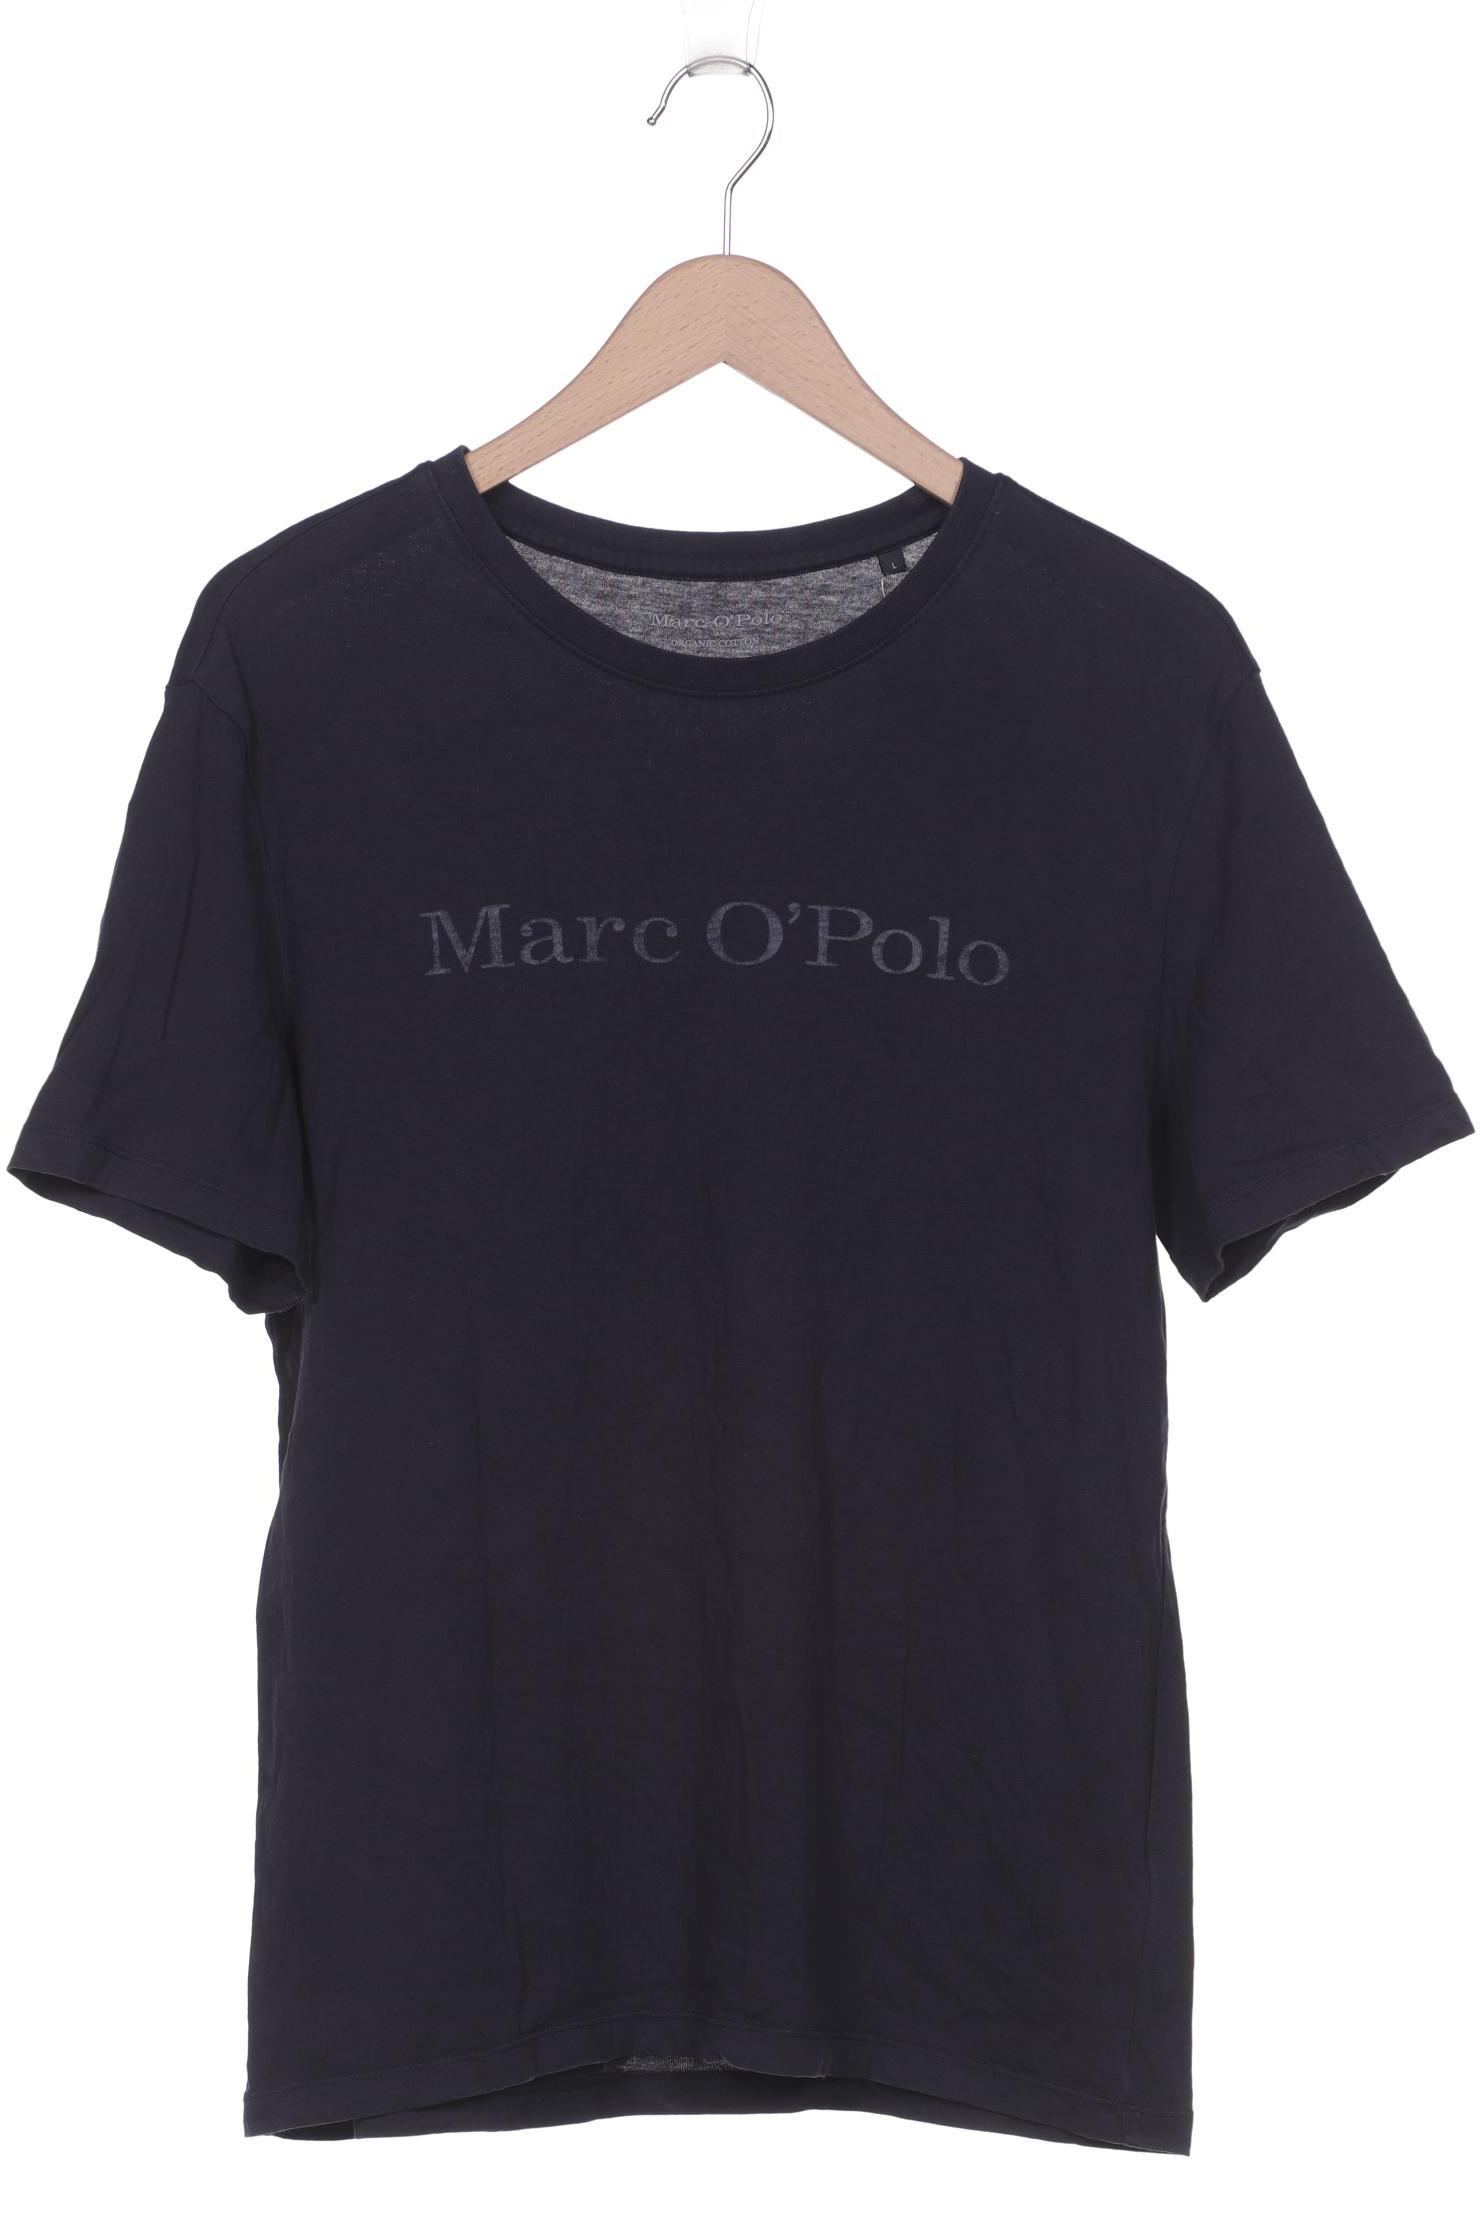 Marc O Polo Herren T-Shirt, marineblau von Marc O Polo